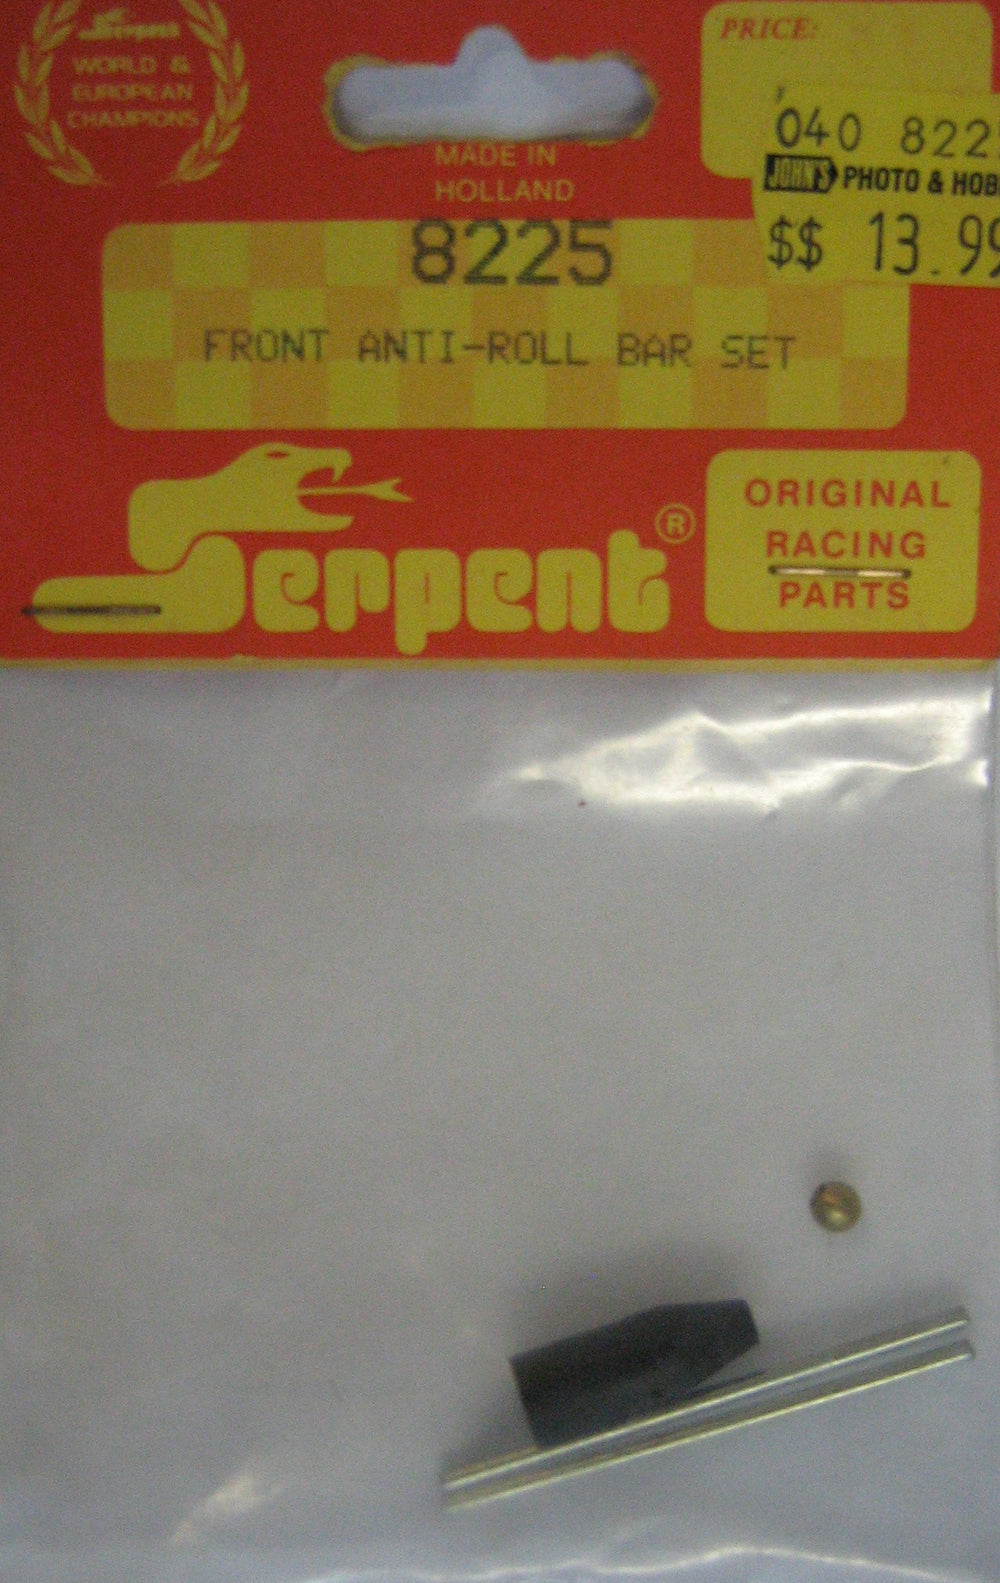 SERPENT # 8225 - ANTI-ROLL BAR